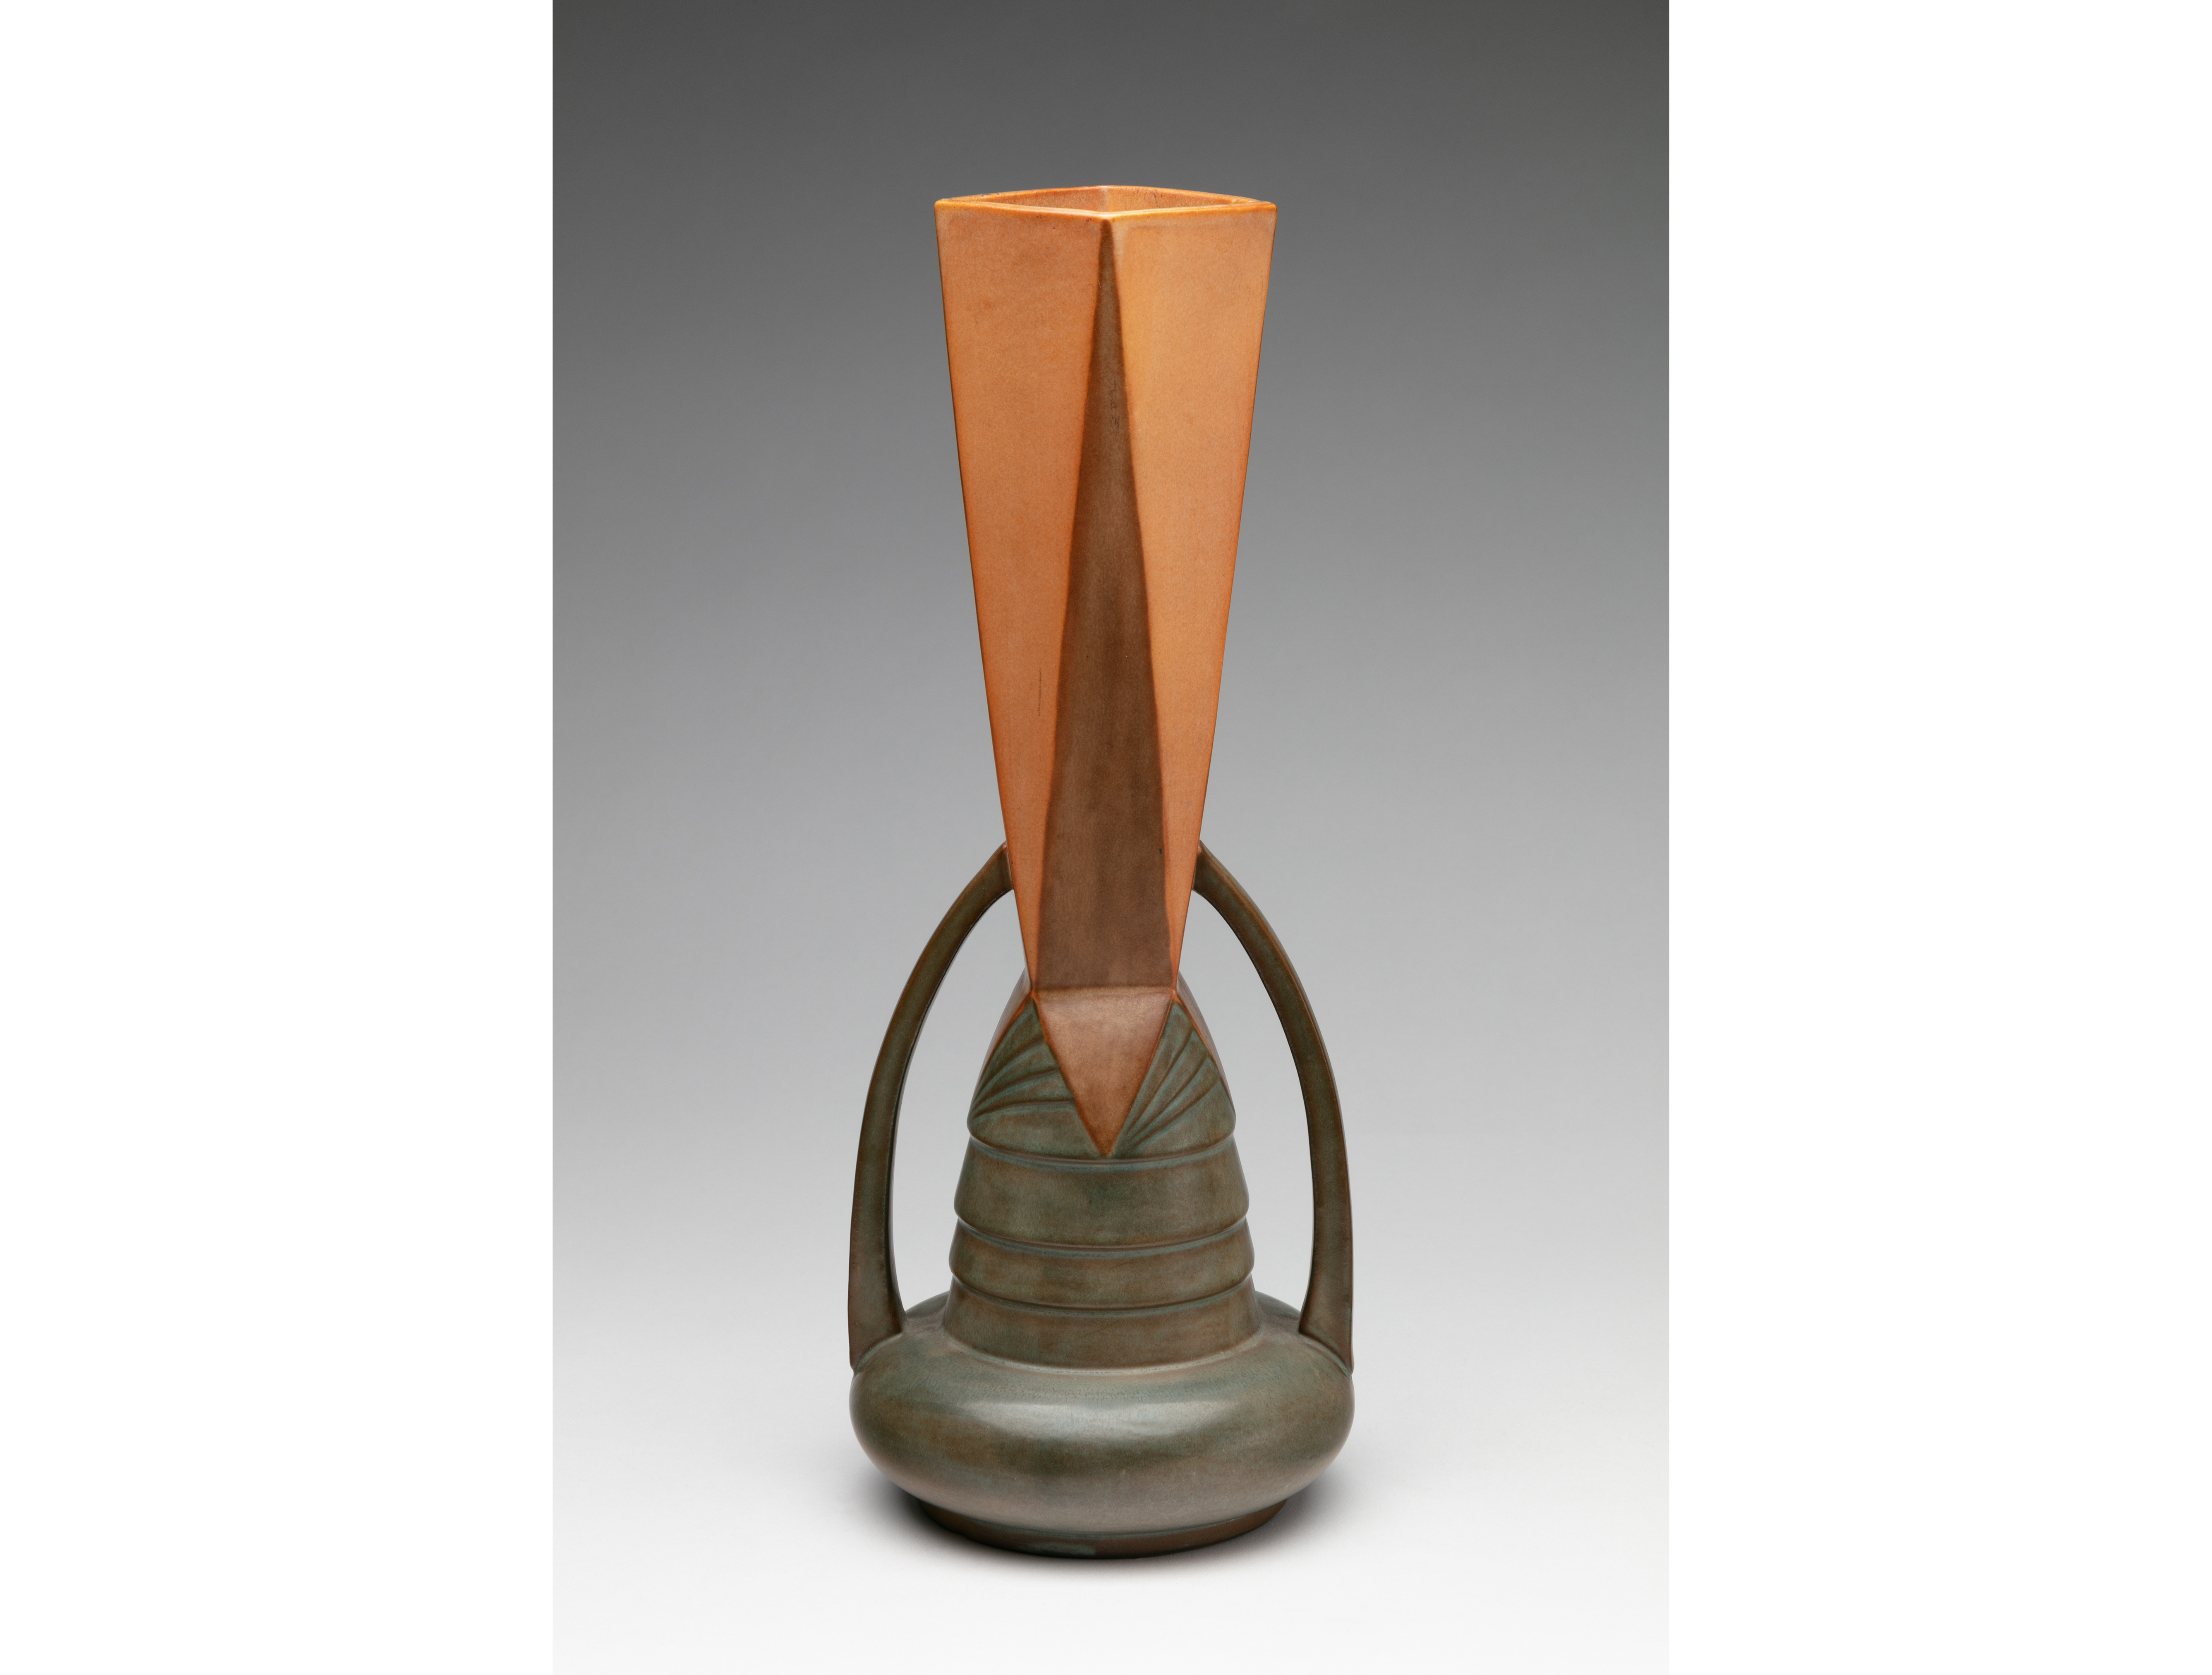 FUTURA / ARCHES (No. 411) 14in vase, 1928, ceramic. Frank L. Ferrell, designer, American, 1878-1961. Roseville Pottery Company, manufacturer, Zanesville, Ohio 1890-1954. 14 3/8 by 5 1/2 by 5 1/2in. Collection Kirkland Museum of Fine & Decorative Art, Denver, CG0445